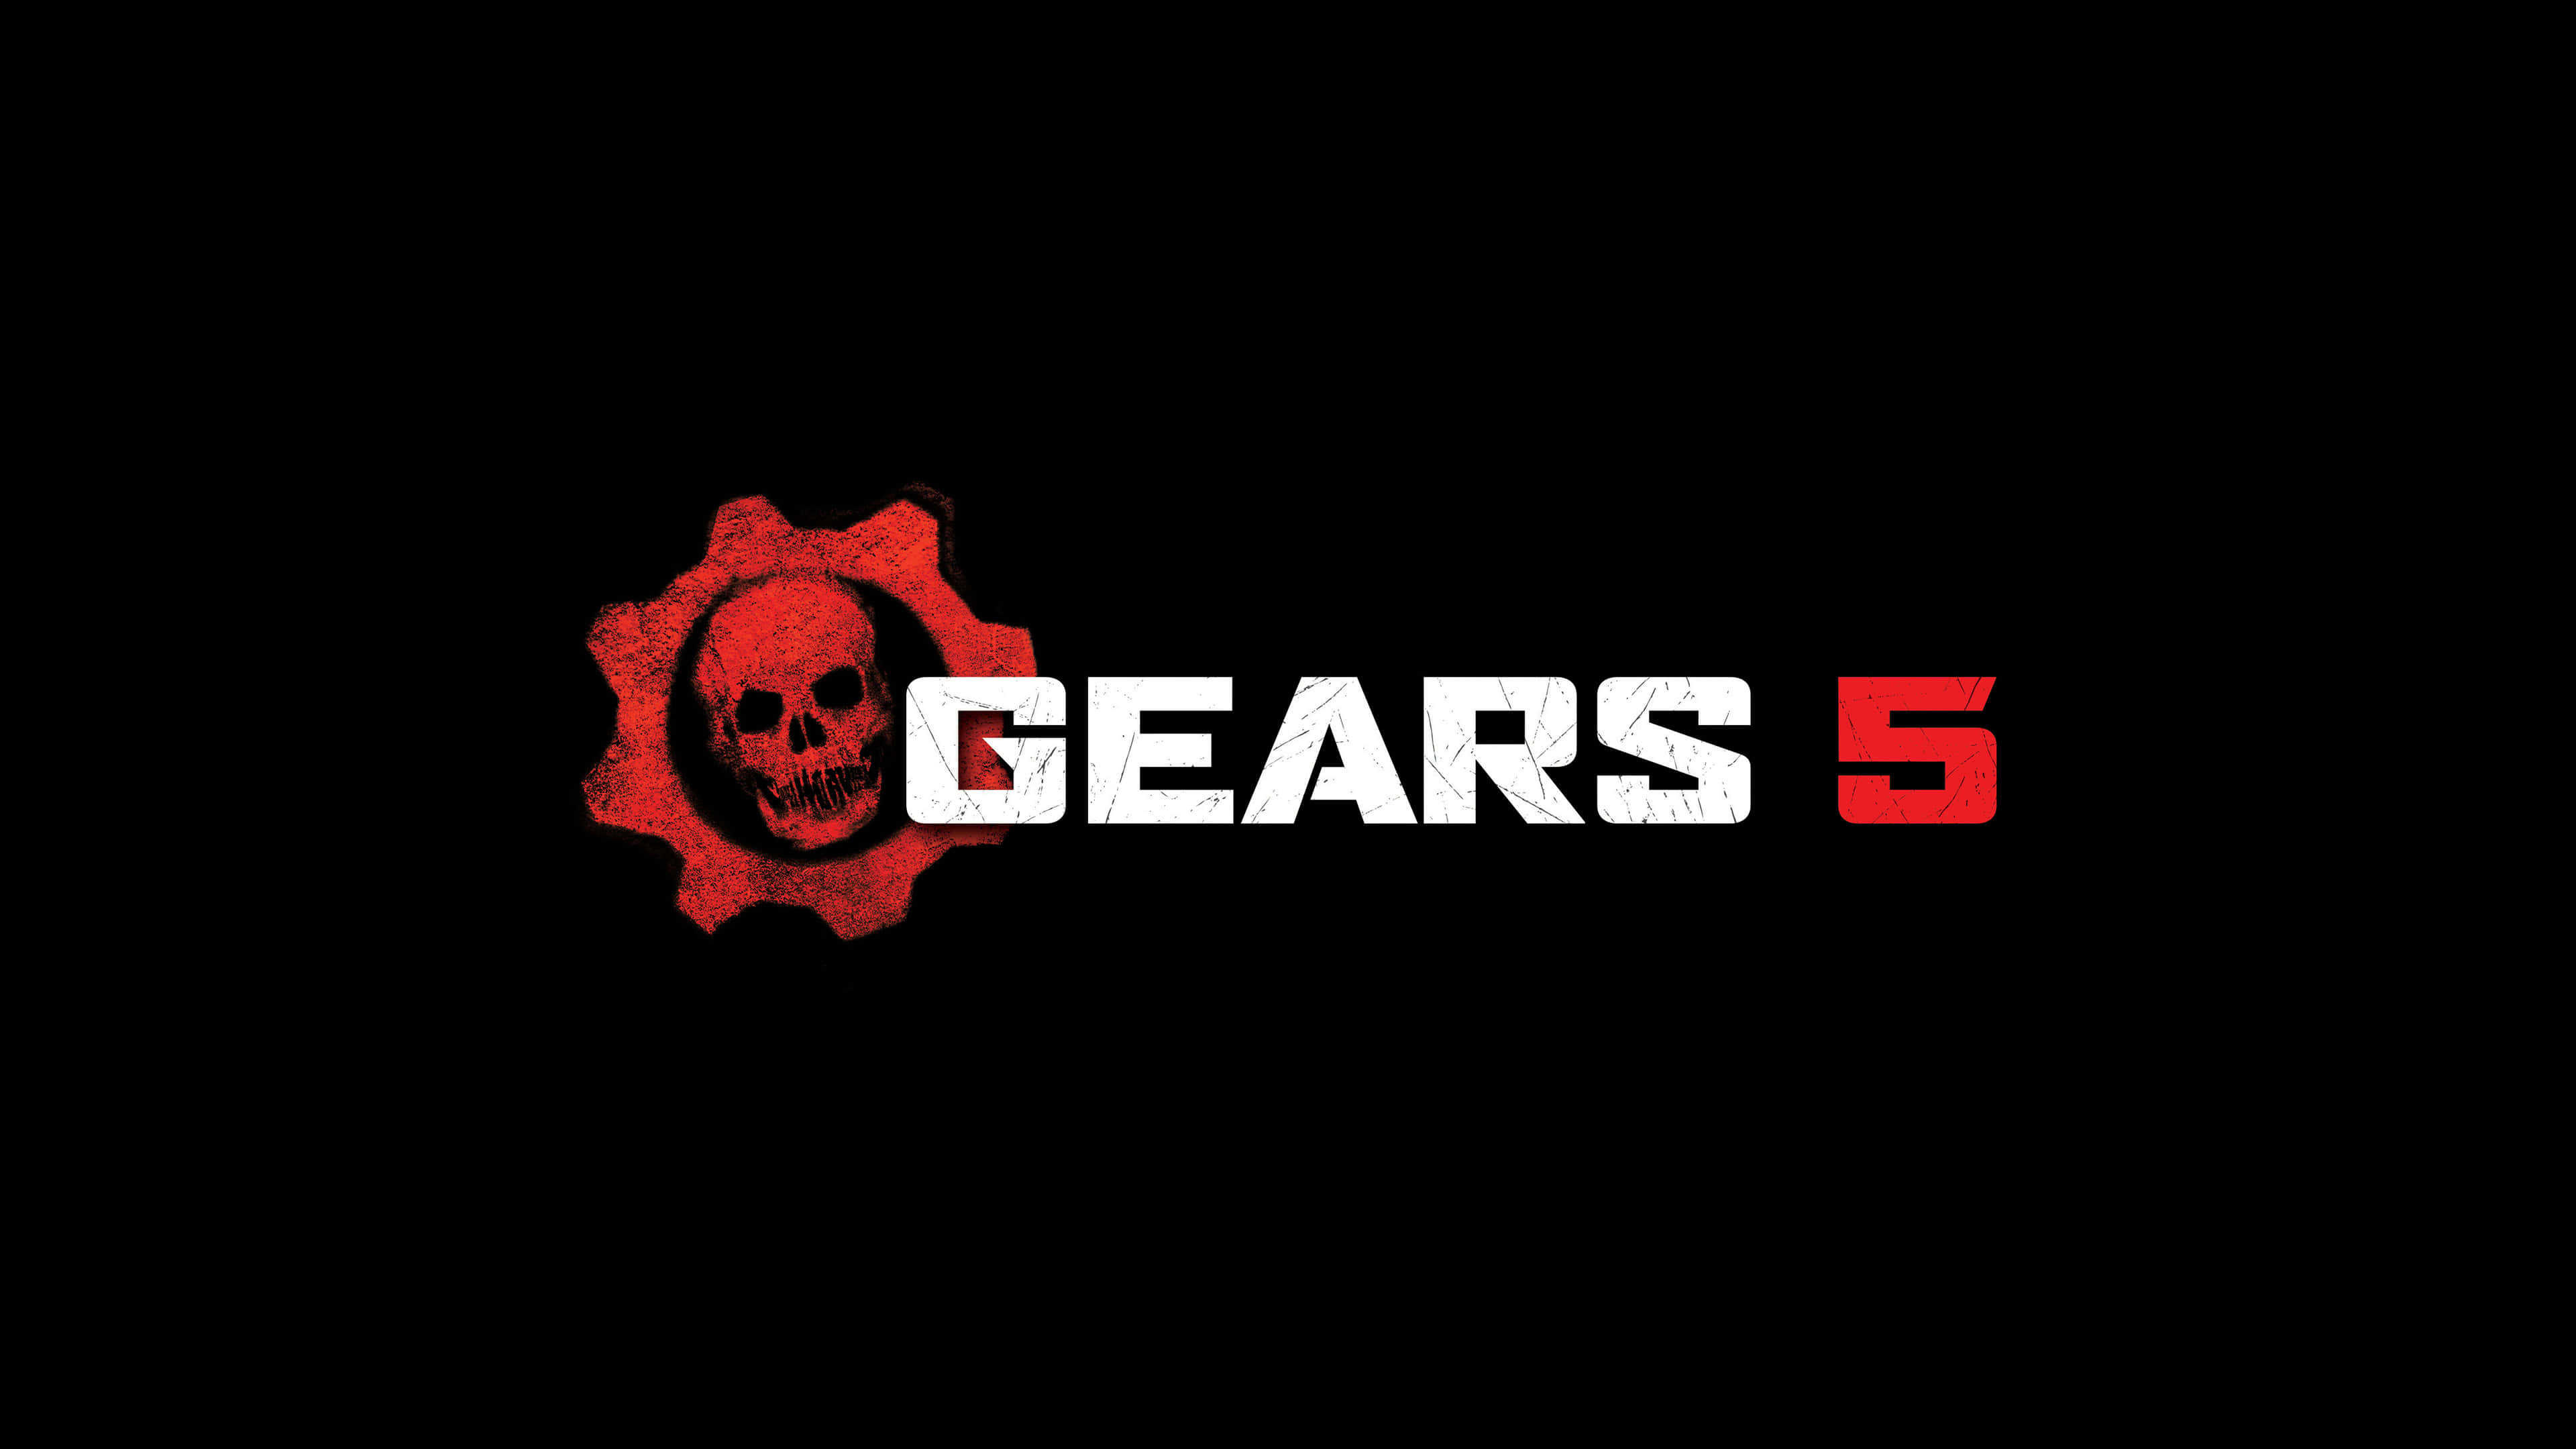 Gears 5 logo wallpaper, UHD 4K resolution, Distinctive branding, Gaming connection, 3840x2160 4K Desktop